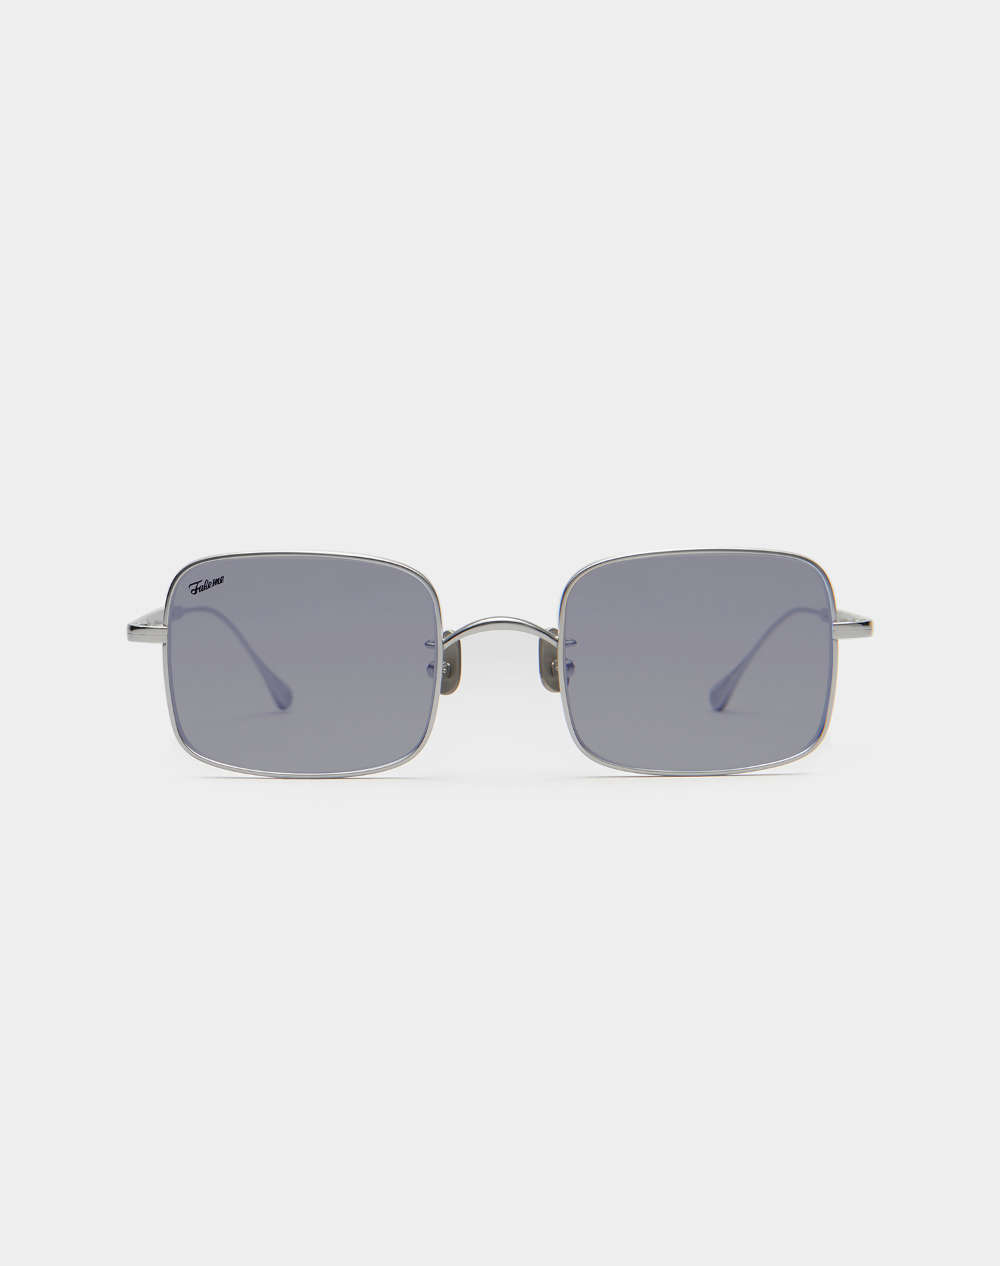 glasses grey color image-S1L5